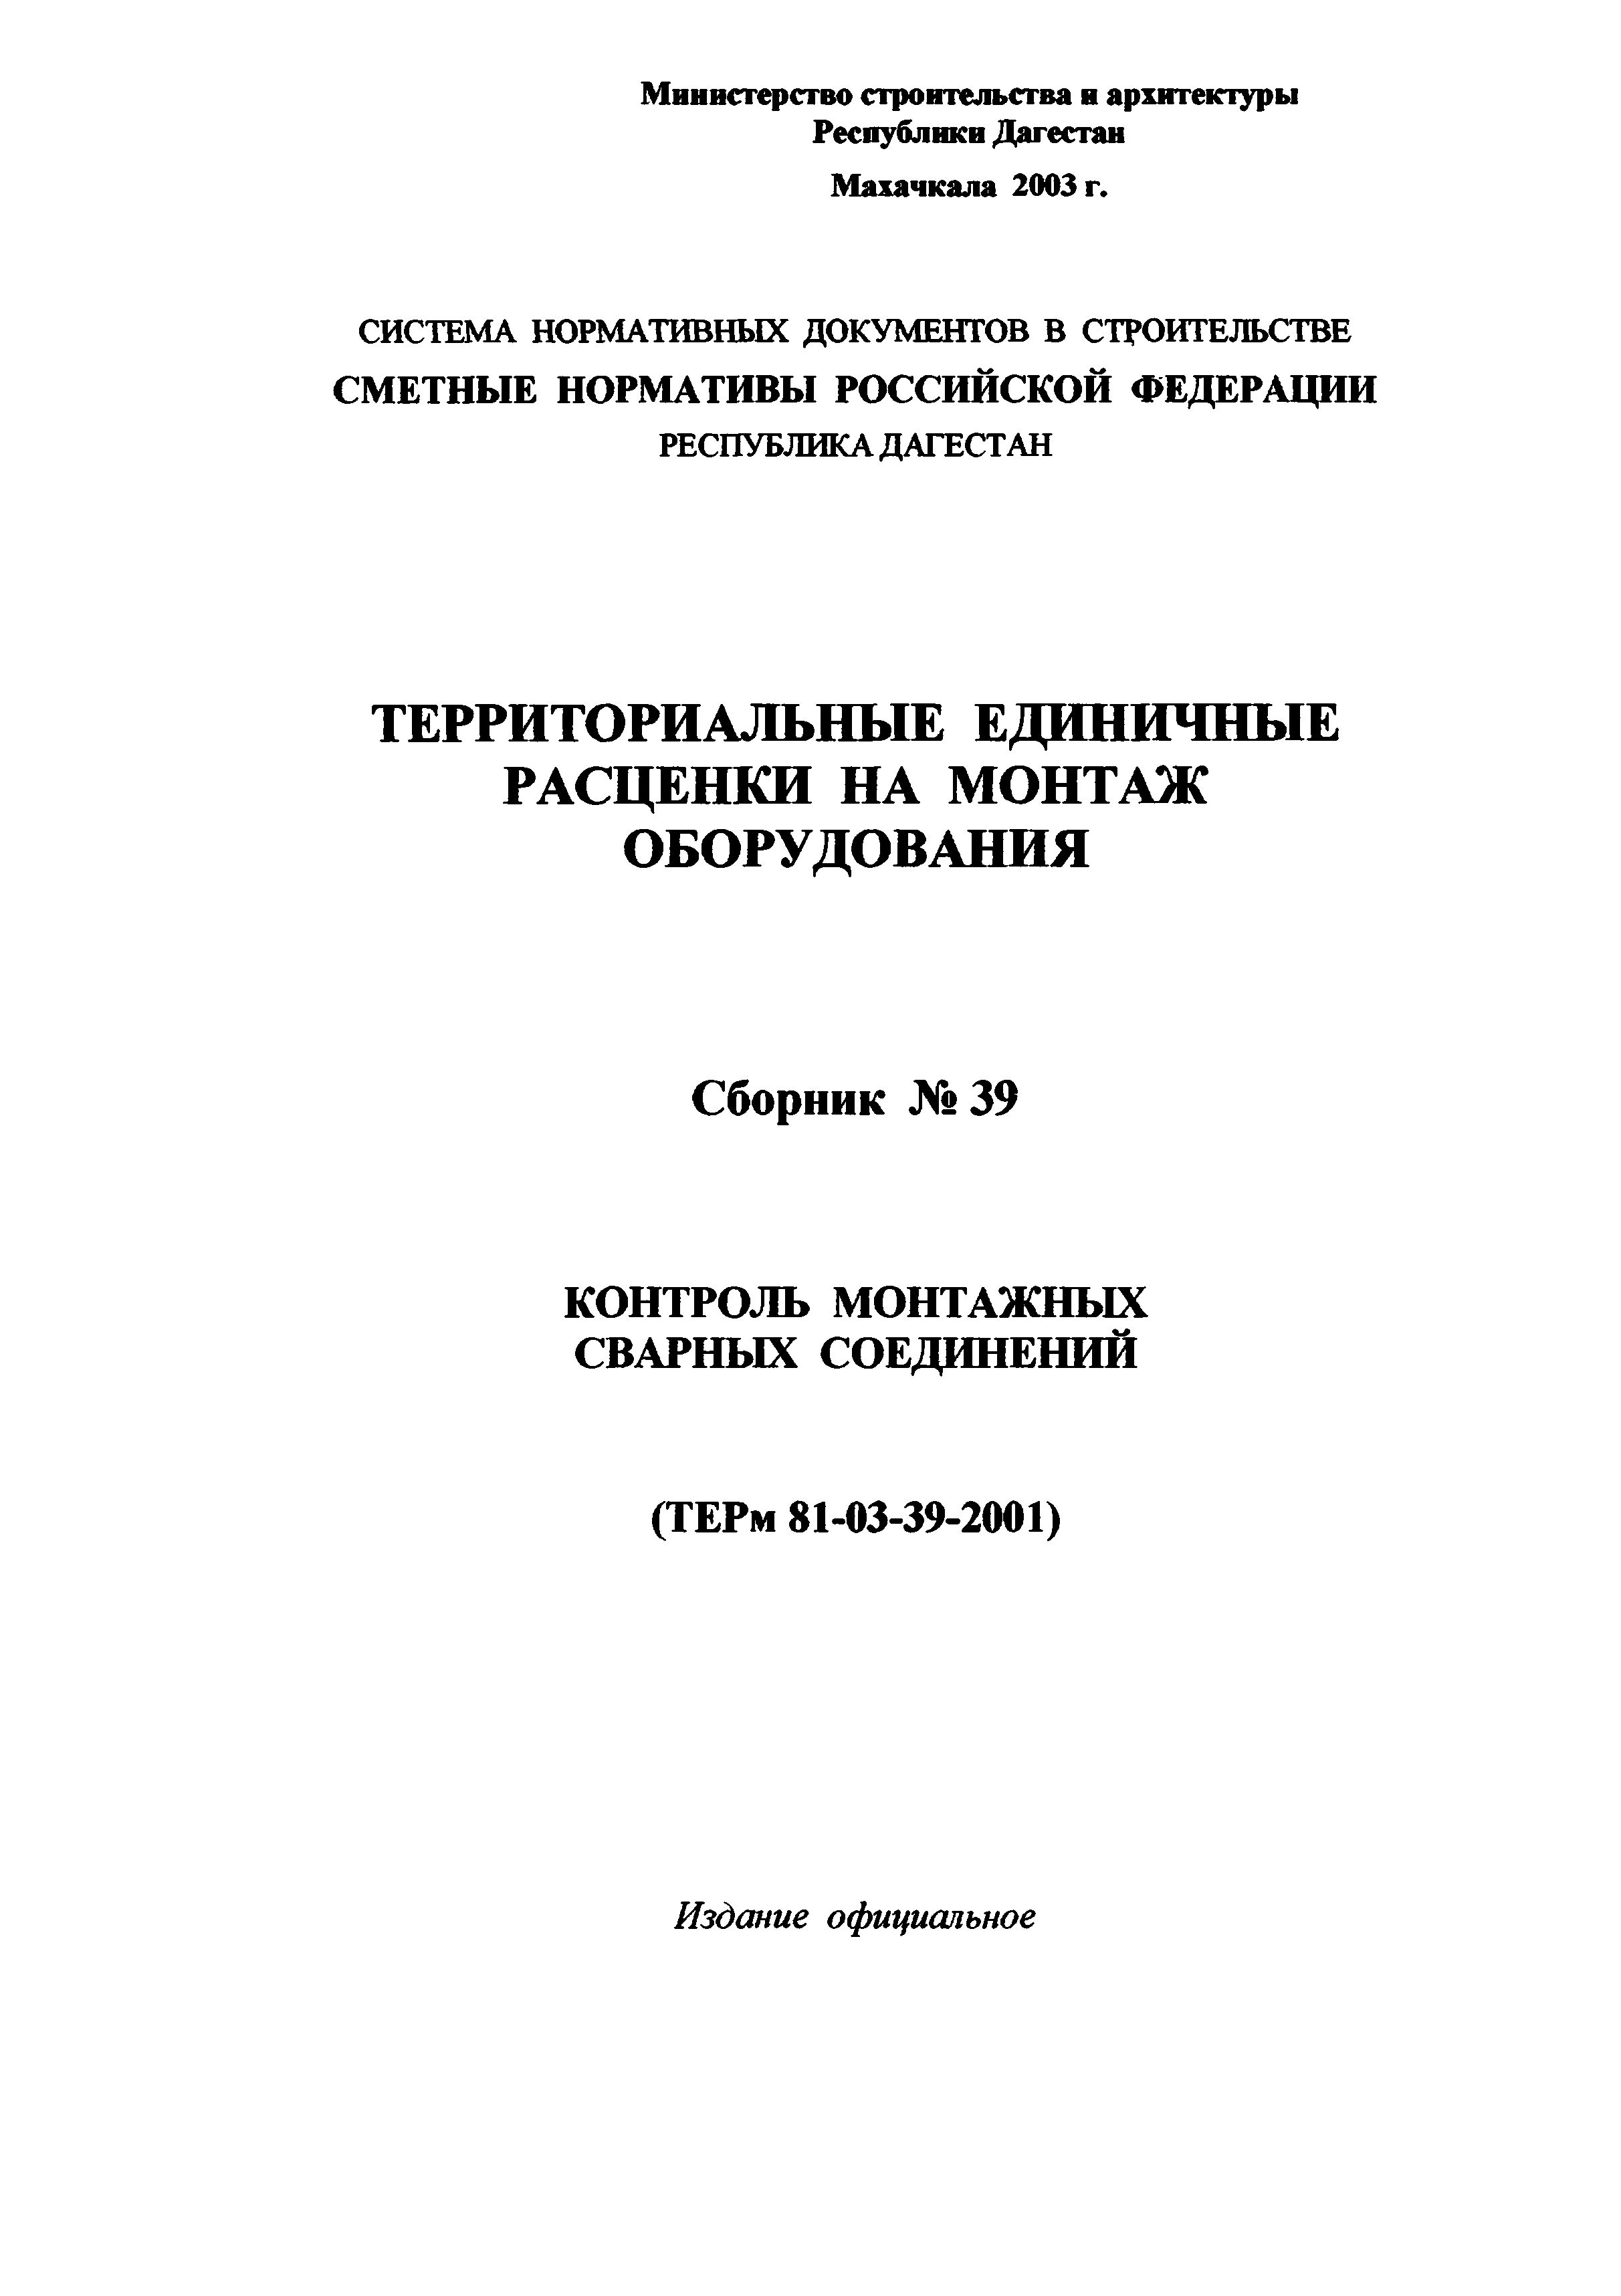 ТЕРм Республика Дагестан 2001-39